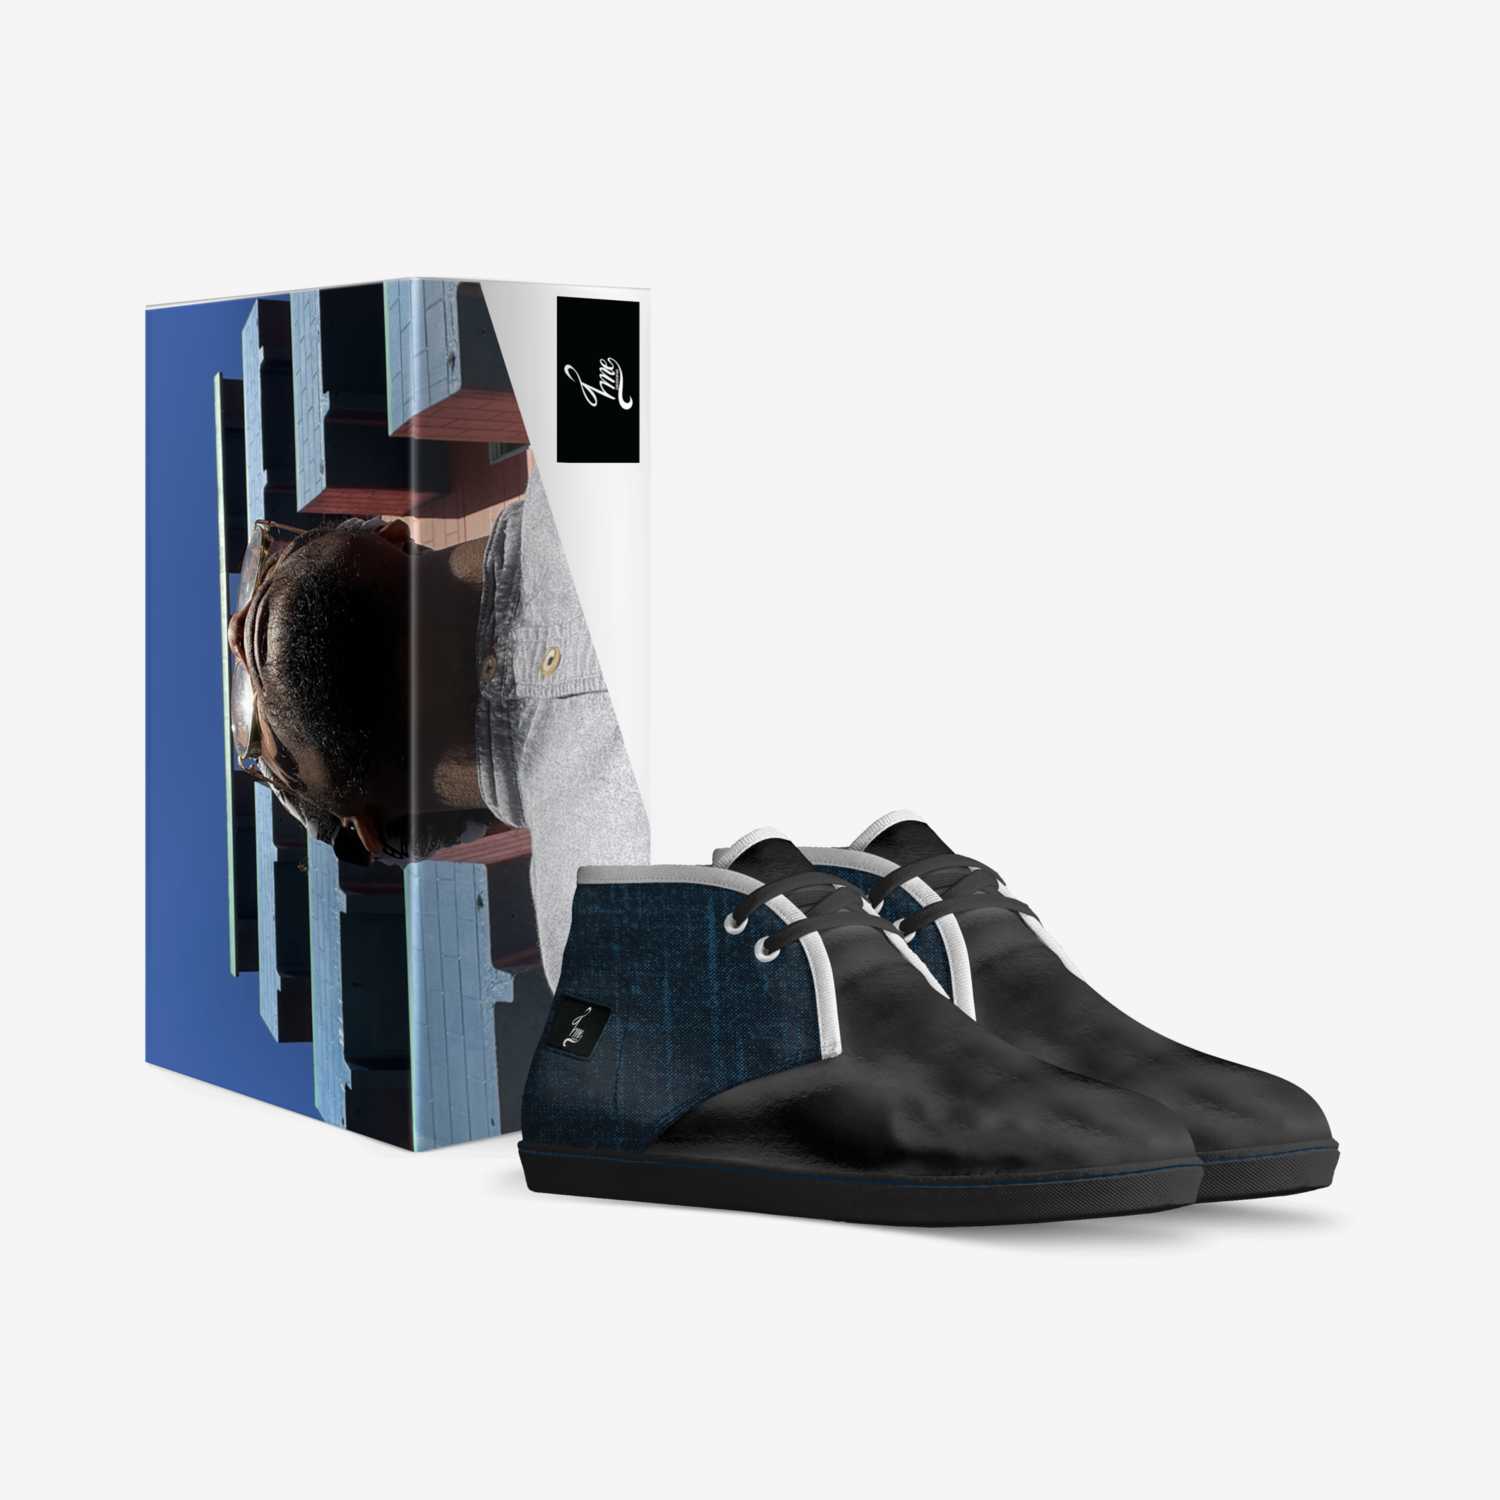 OTOS custom made in Italy shoes by Muzic Melara | Box view